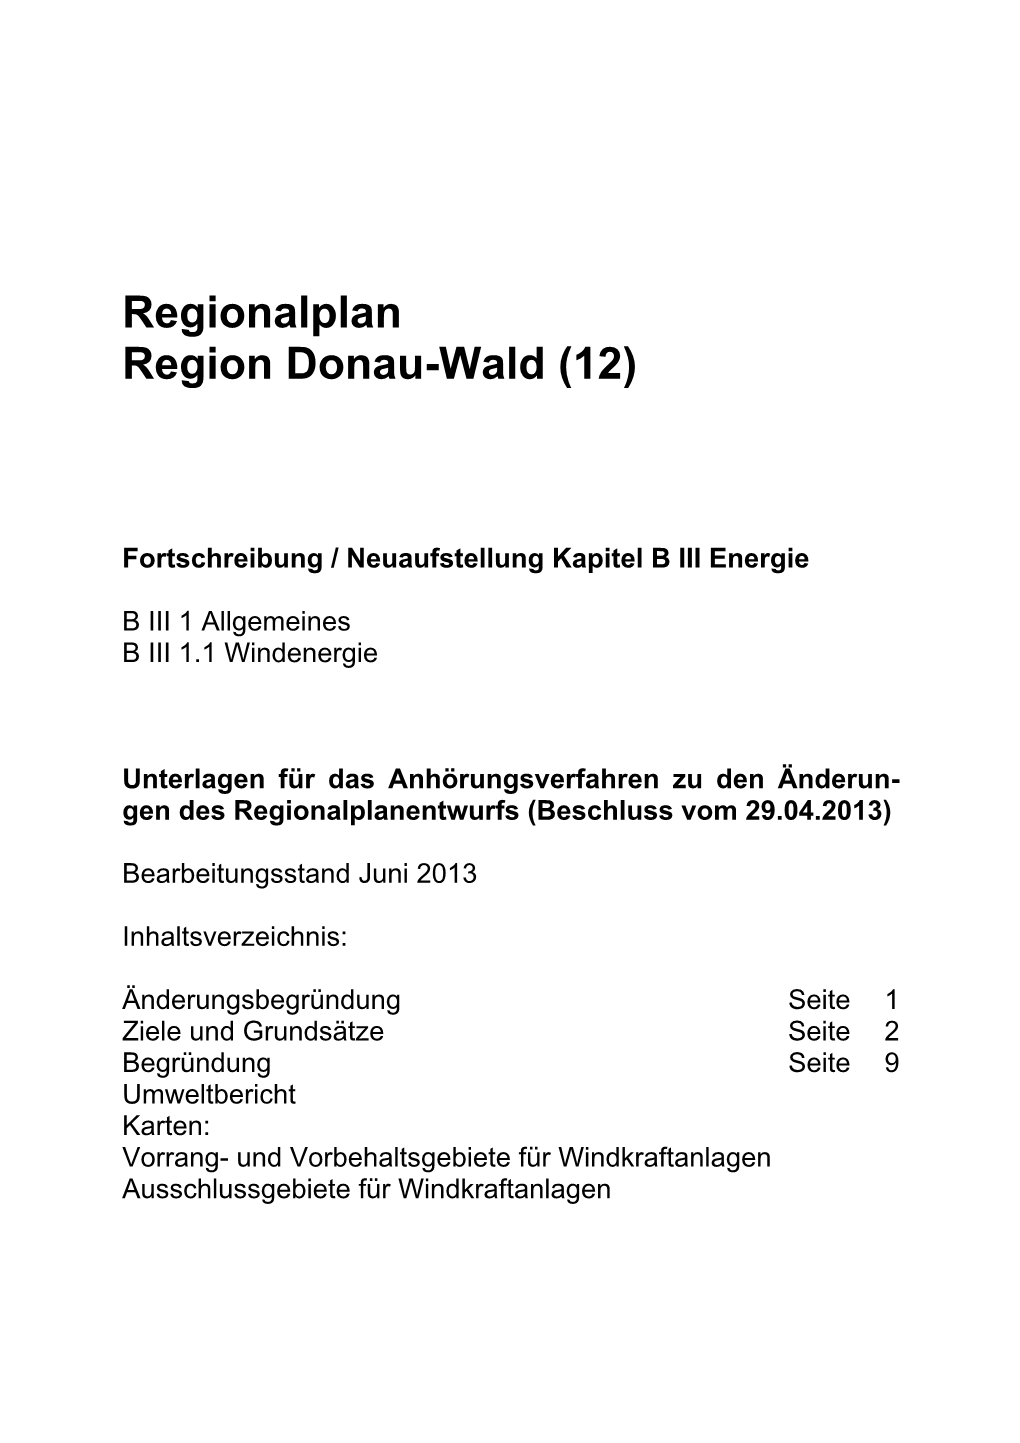 Regionalplan Region Donau-Wald (12)